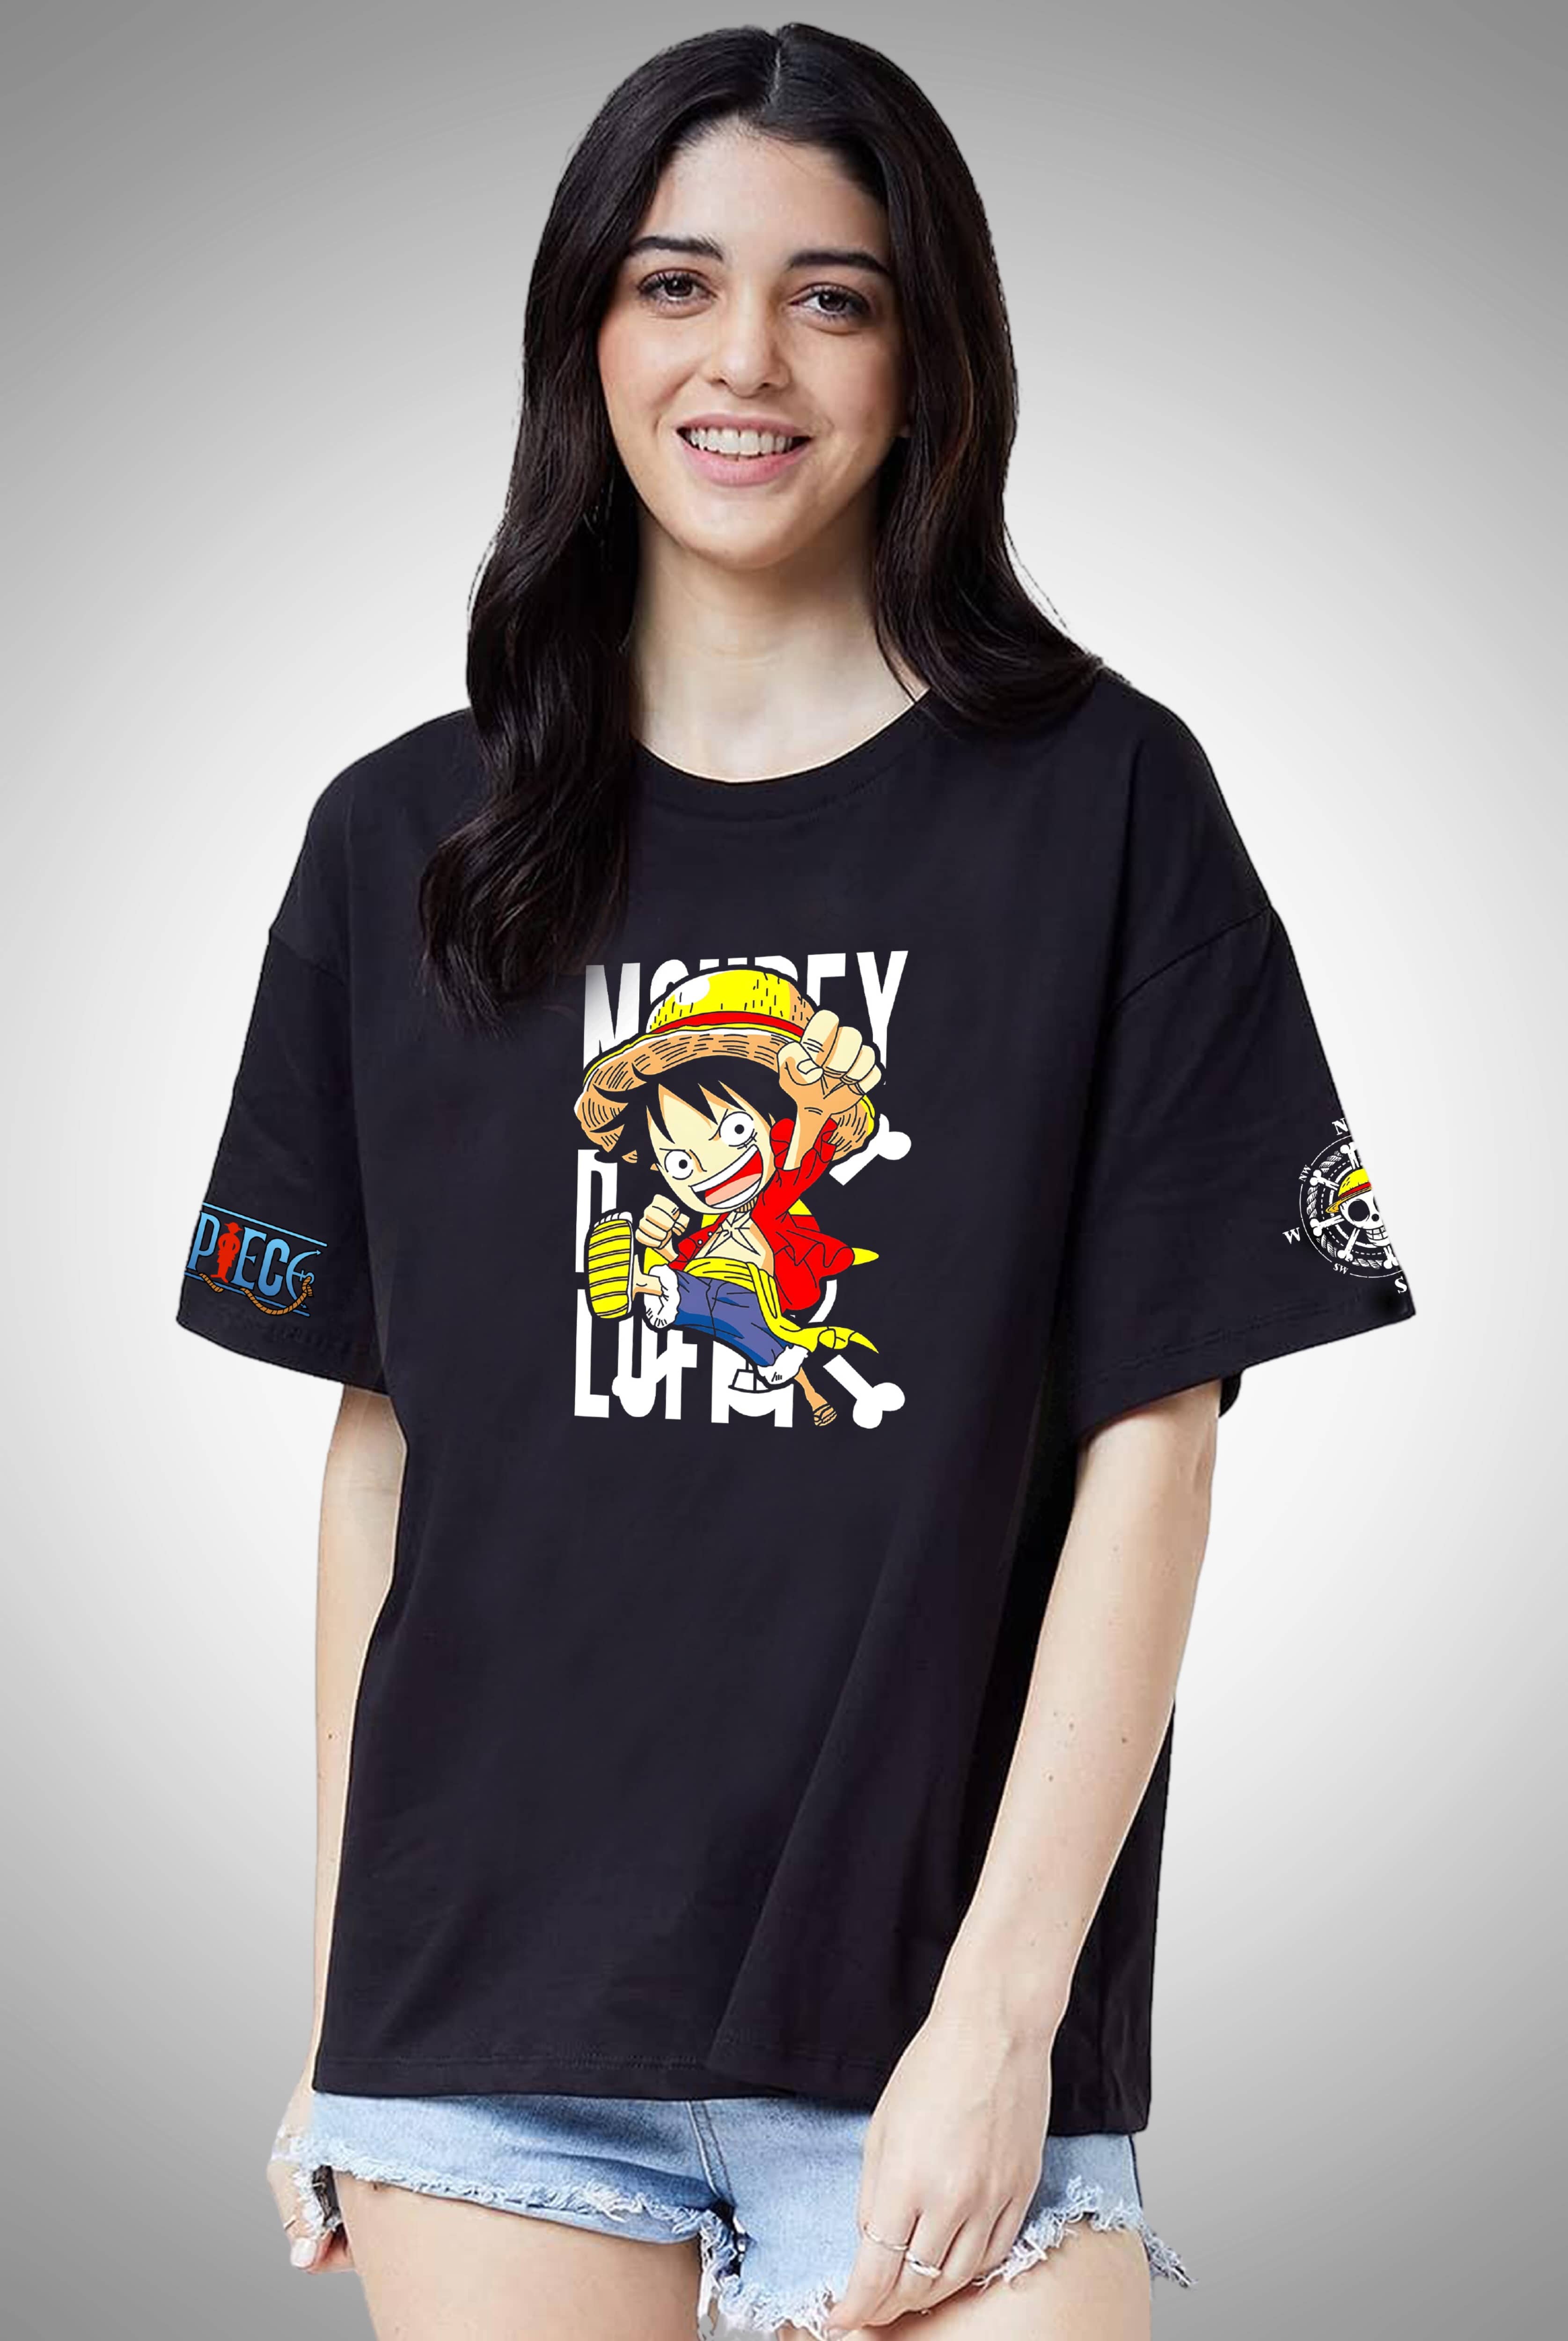 Monkey D Luffy Women's Oversized Anime T-Shirt